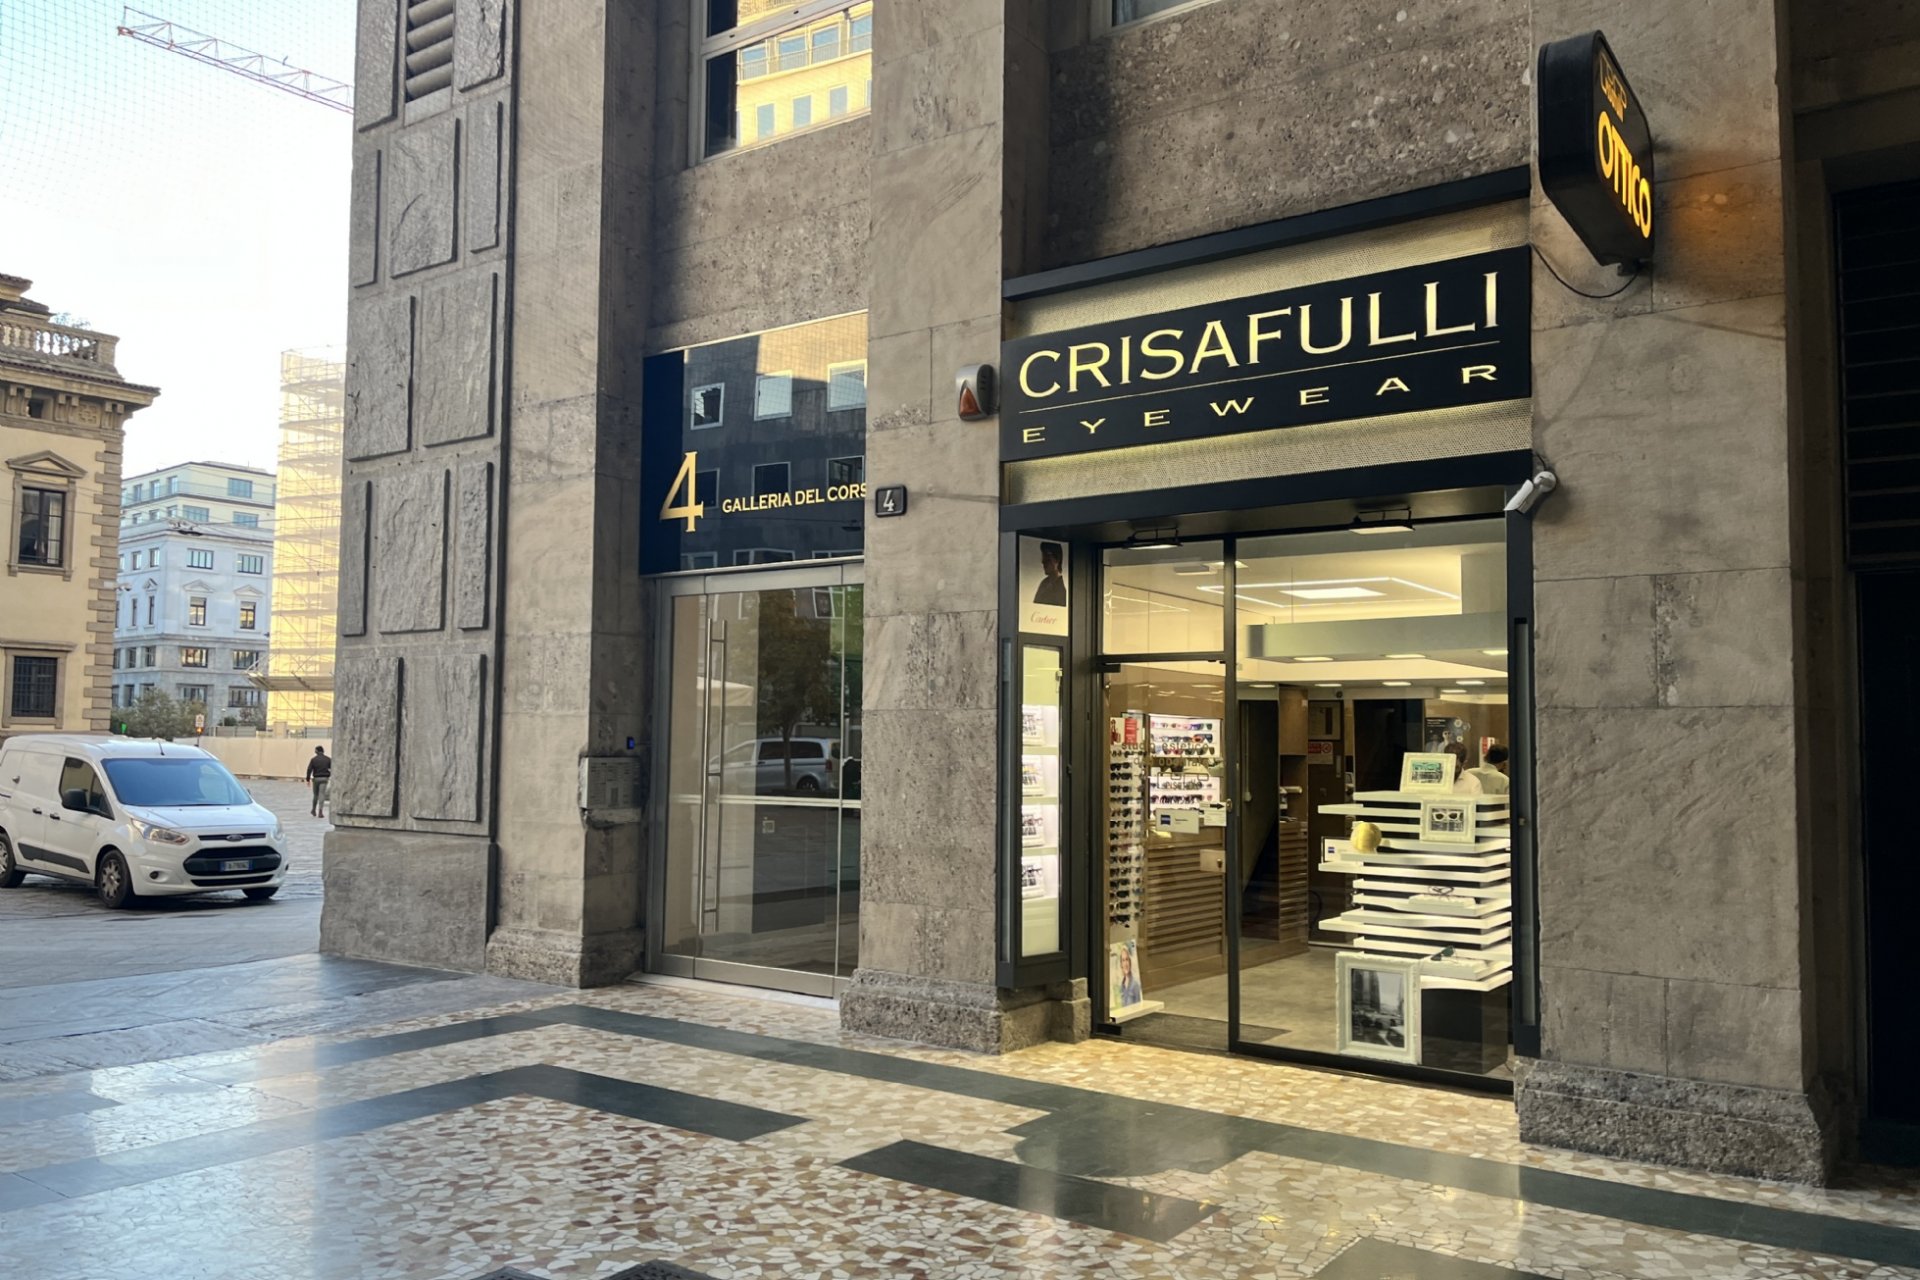 Affitto Breve Office Milano - DUOMO. BEAUTIFUL OFFICE FOR TEMPORARY CONTRACTS Locality Duomo - Cordusio - Missori